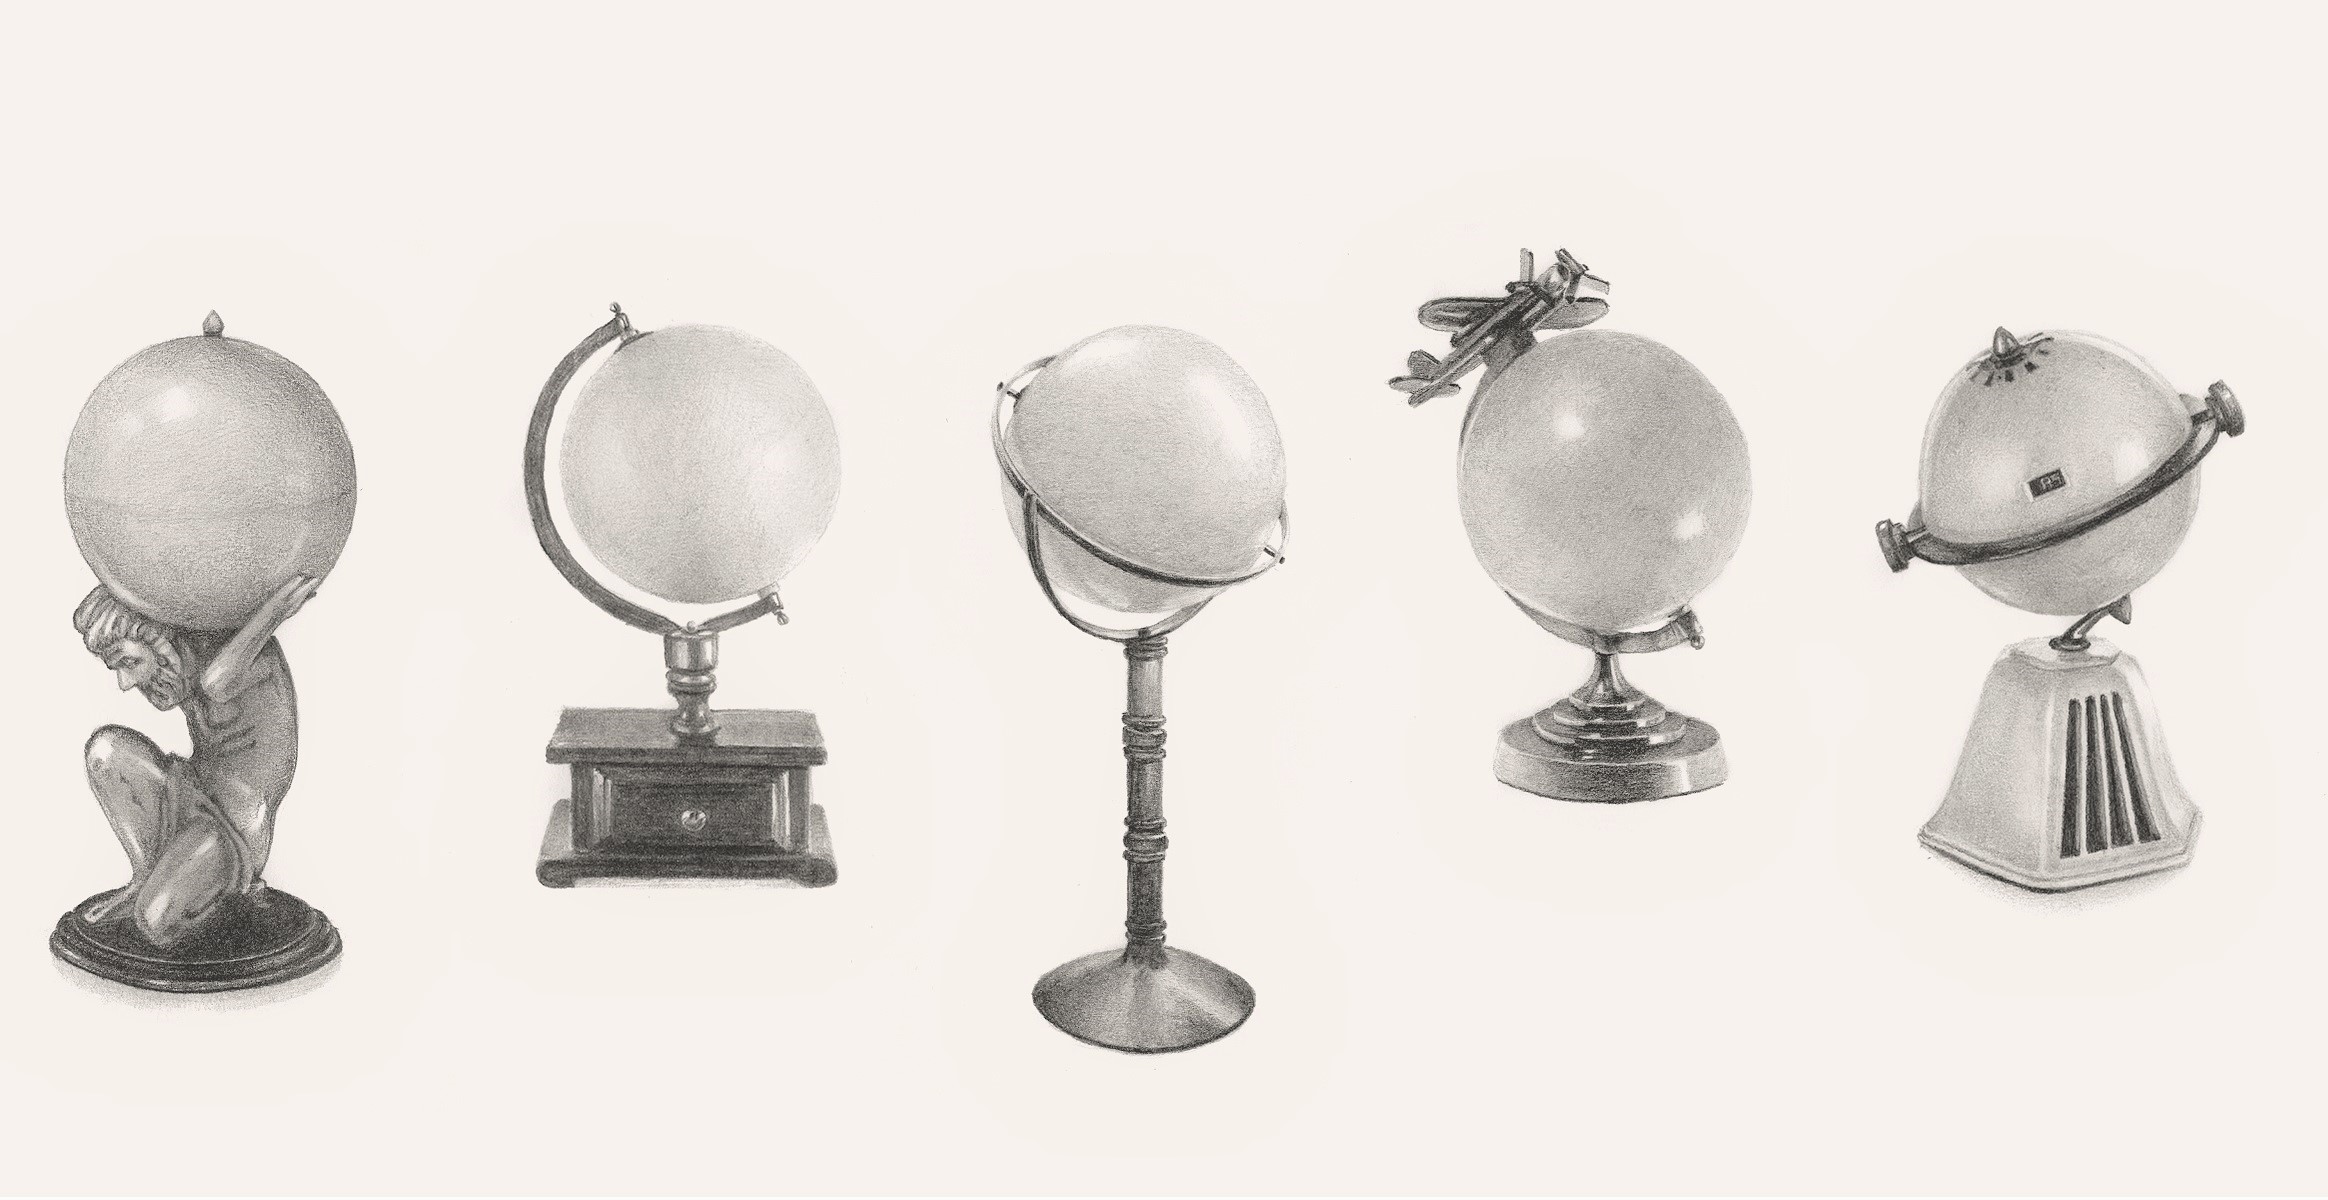 Sketch of four globes by Hondartza Fraga